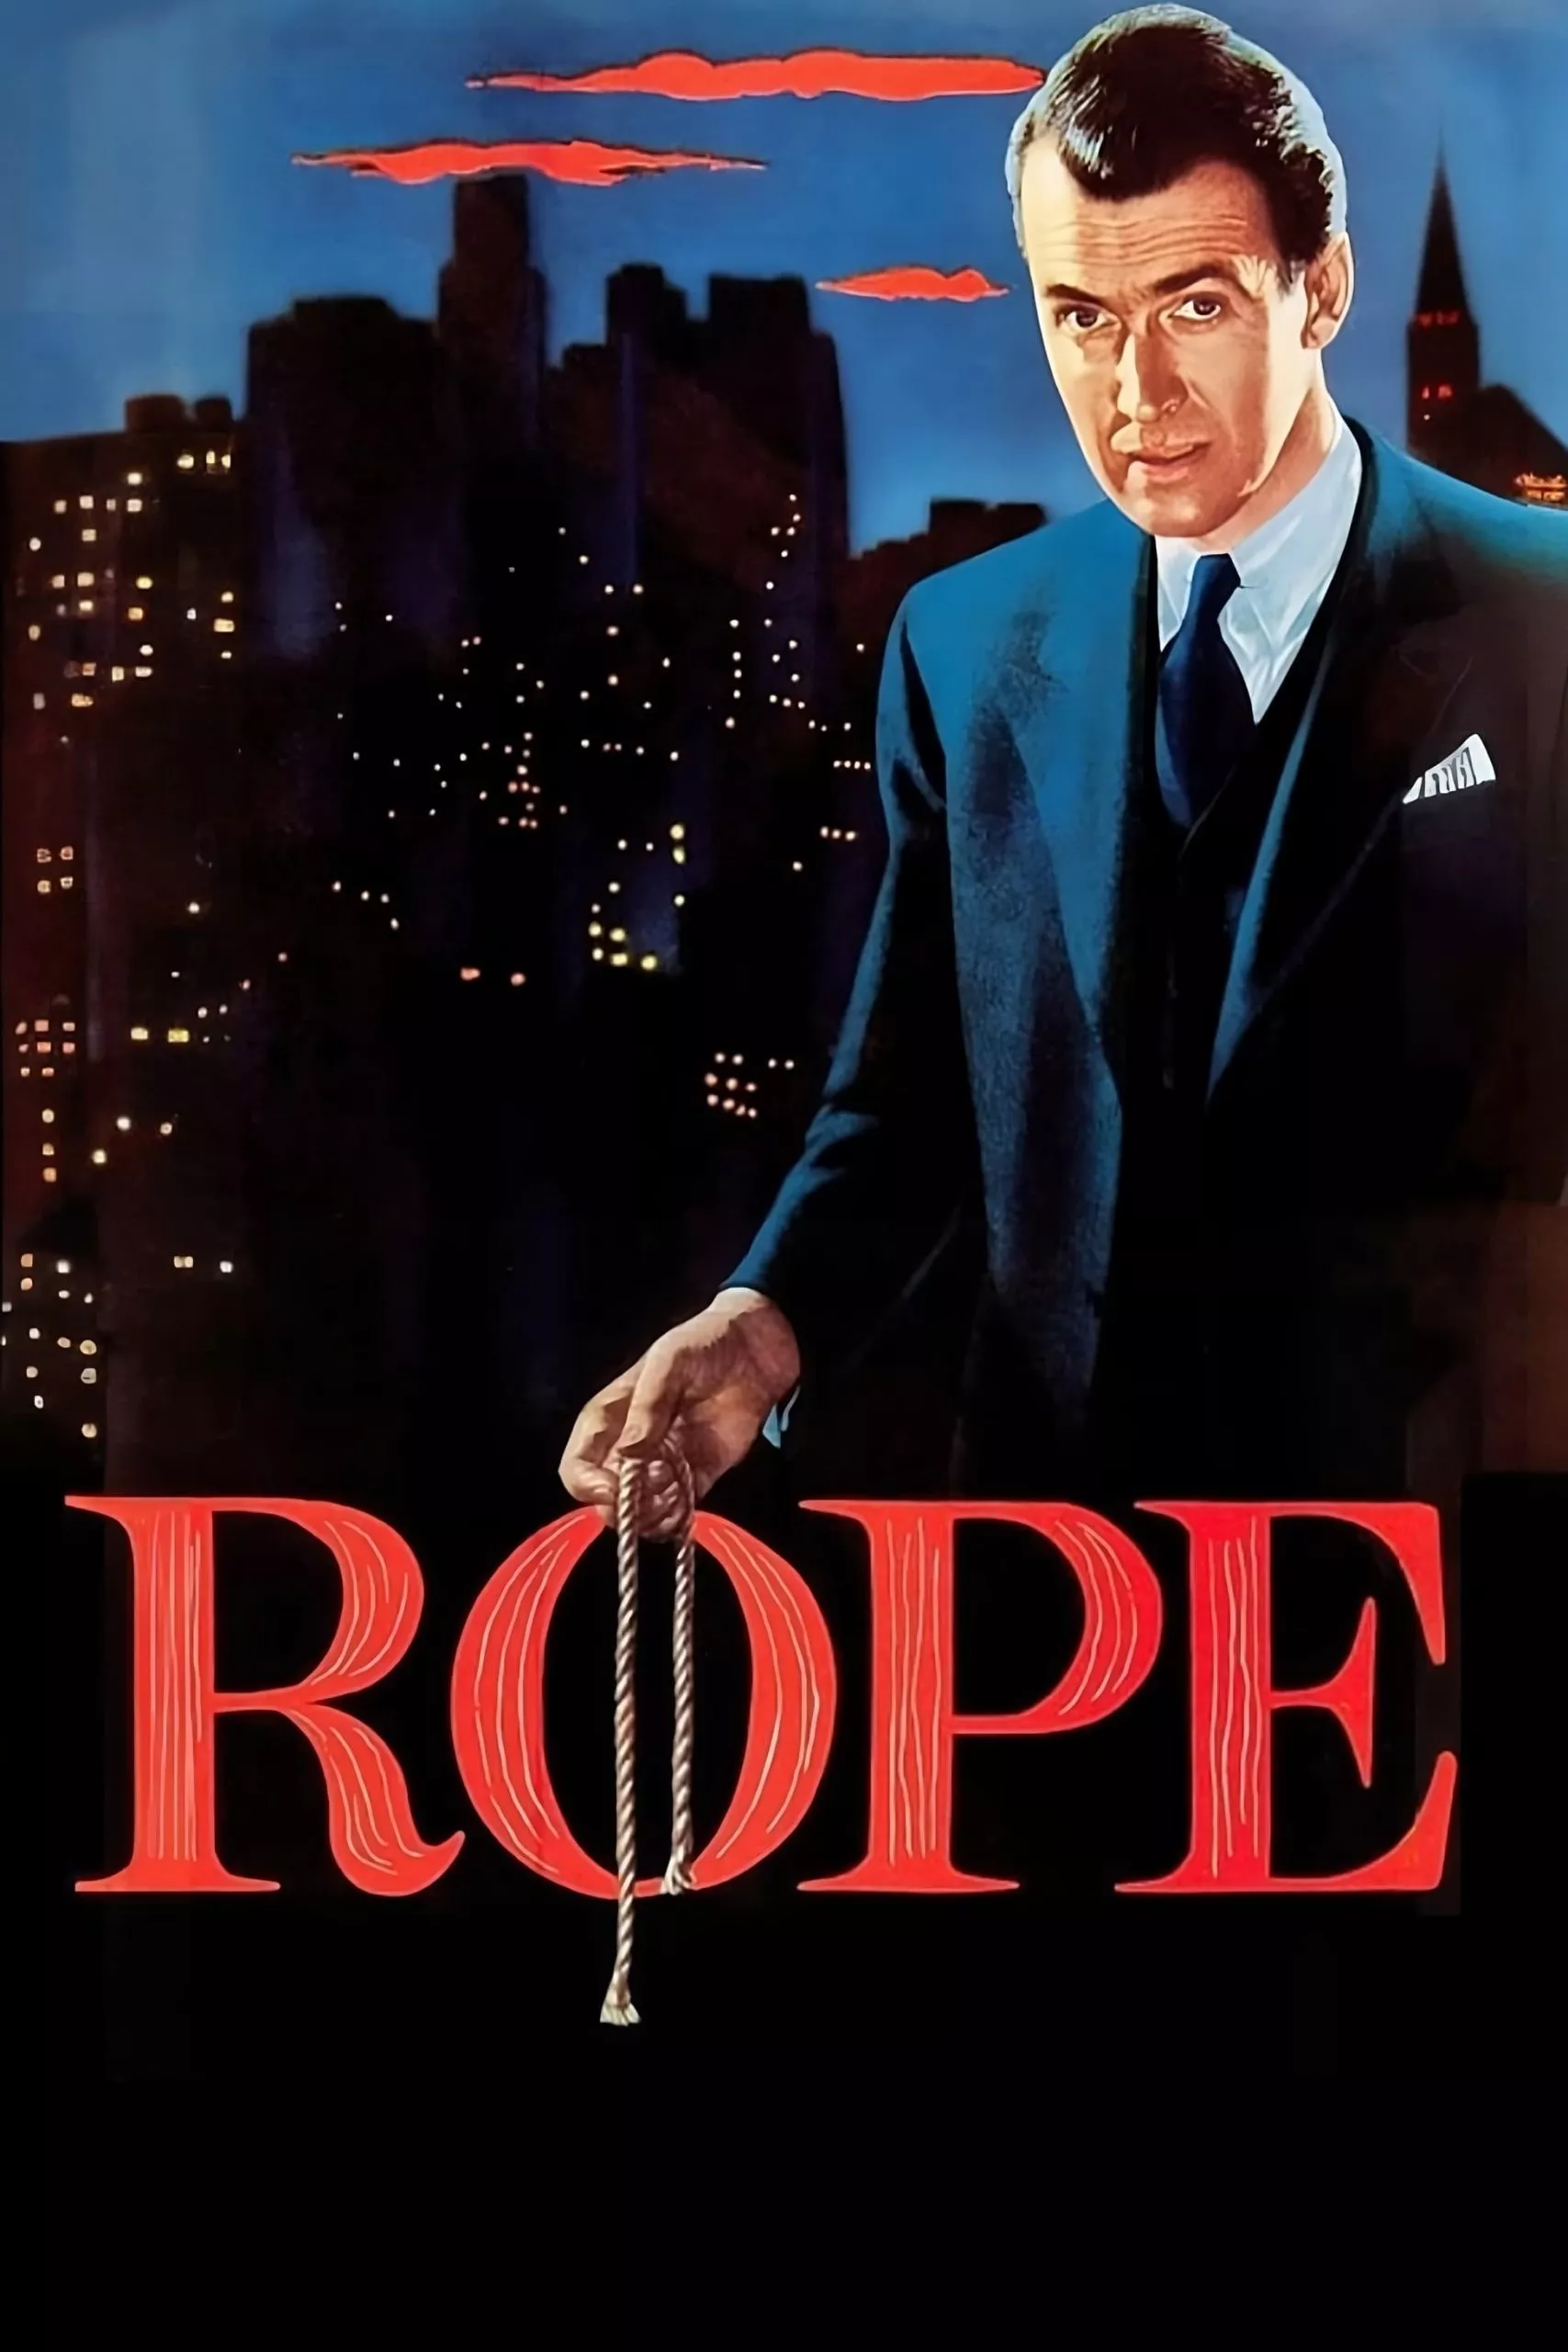 Rope (1948) เชือก